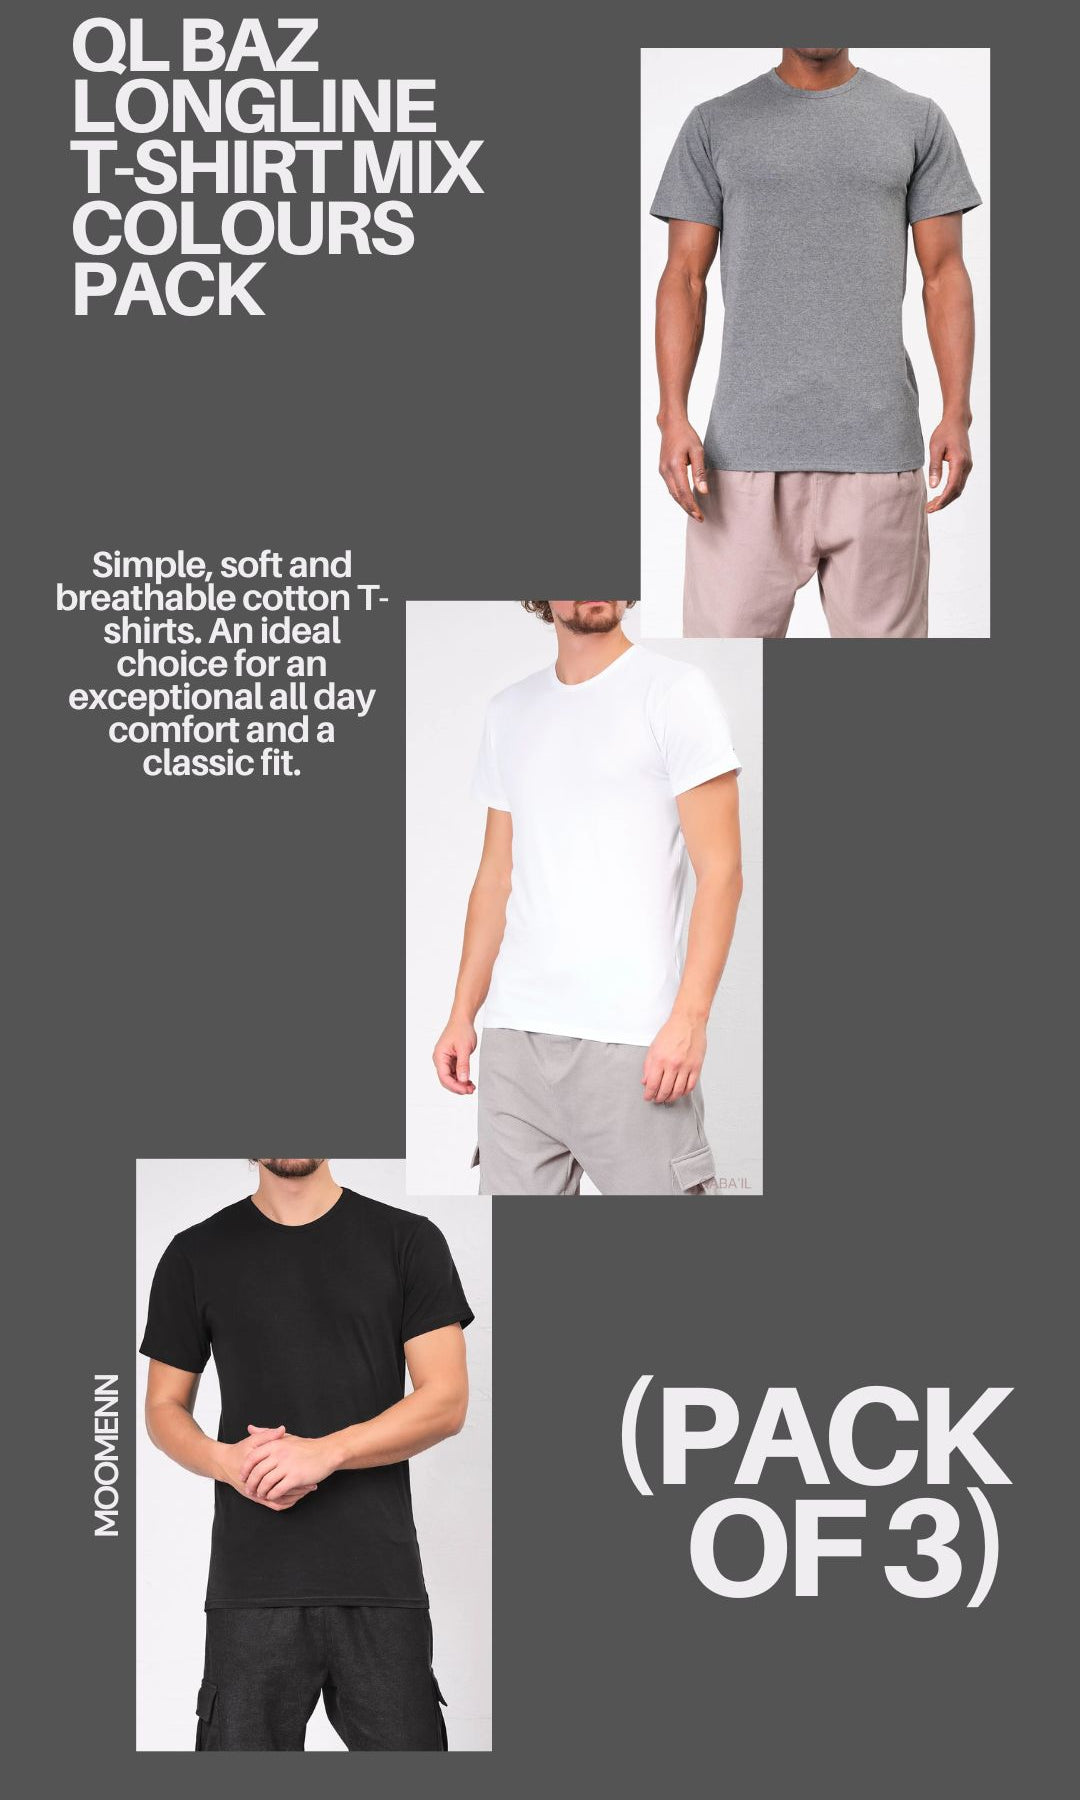  QL BAZ Longline T-Shirt Mix Colours Pack (Pack of 3) - QABA'IL,